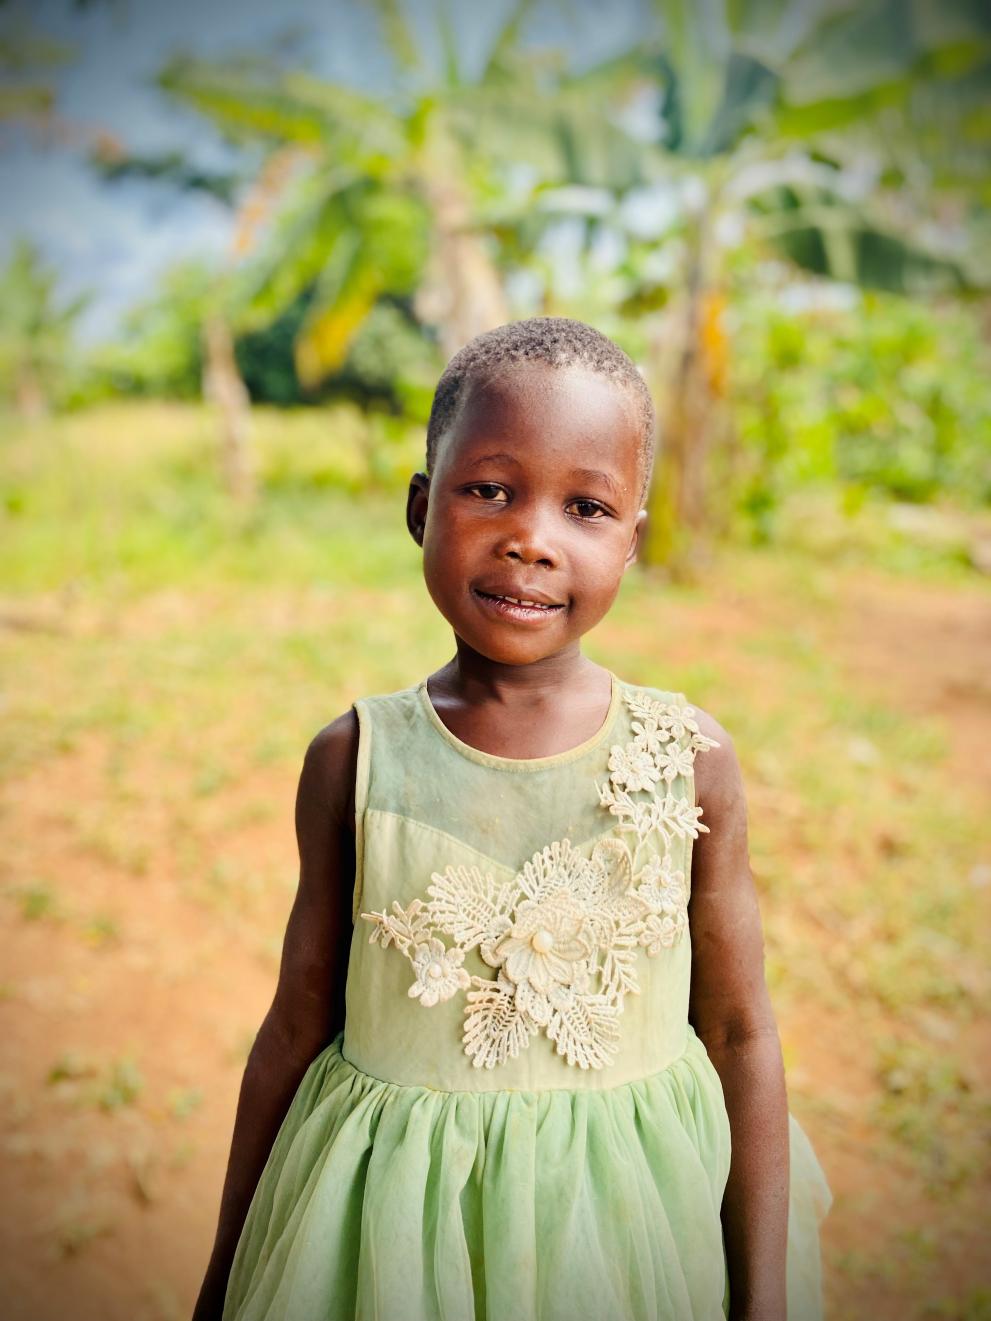 A Ugandan child